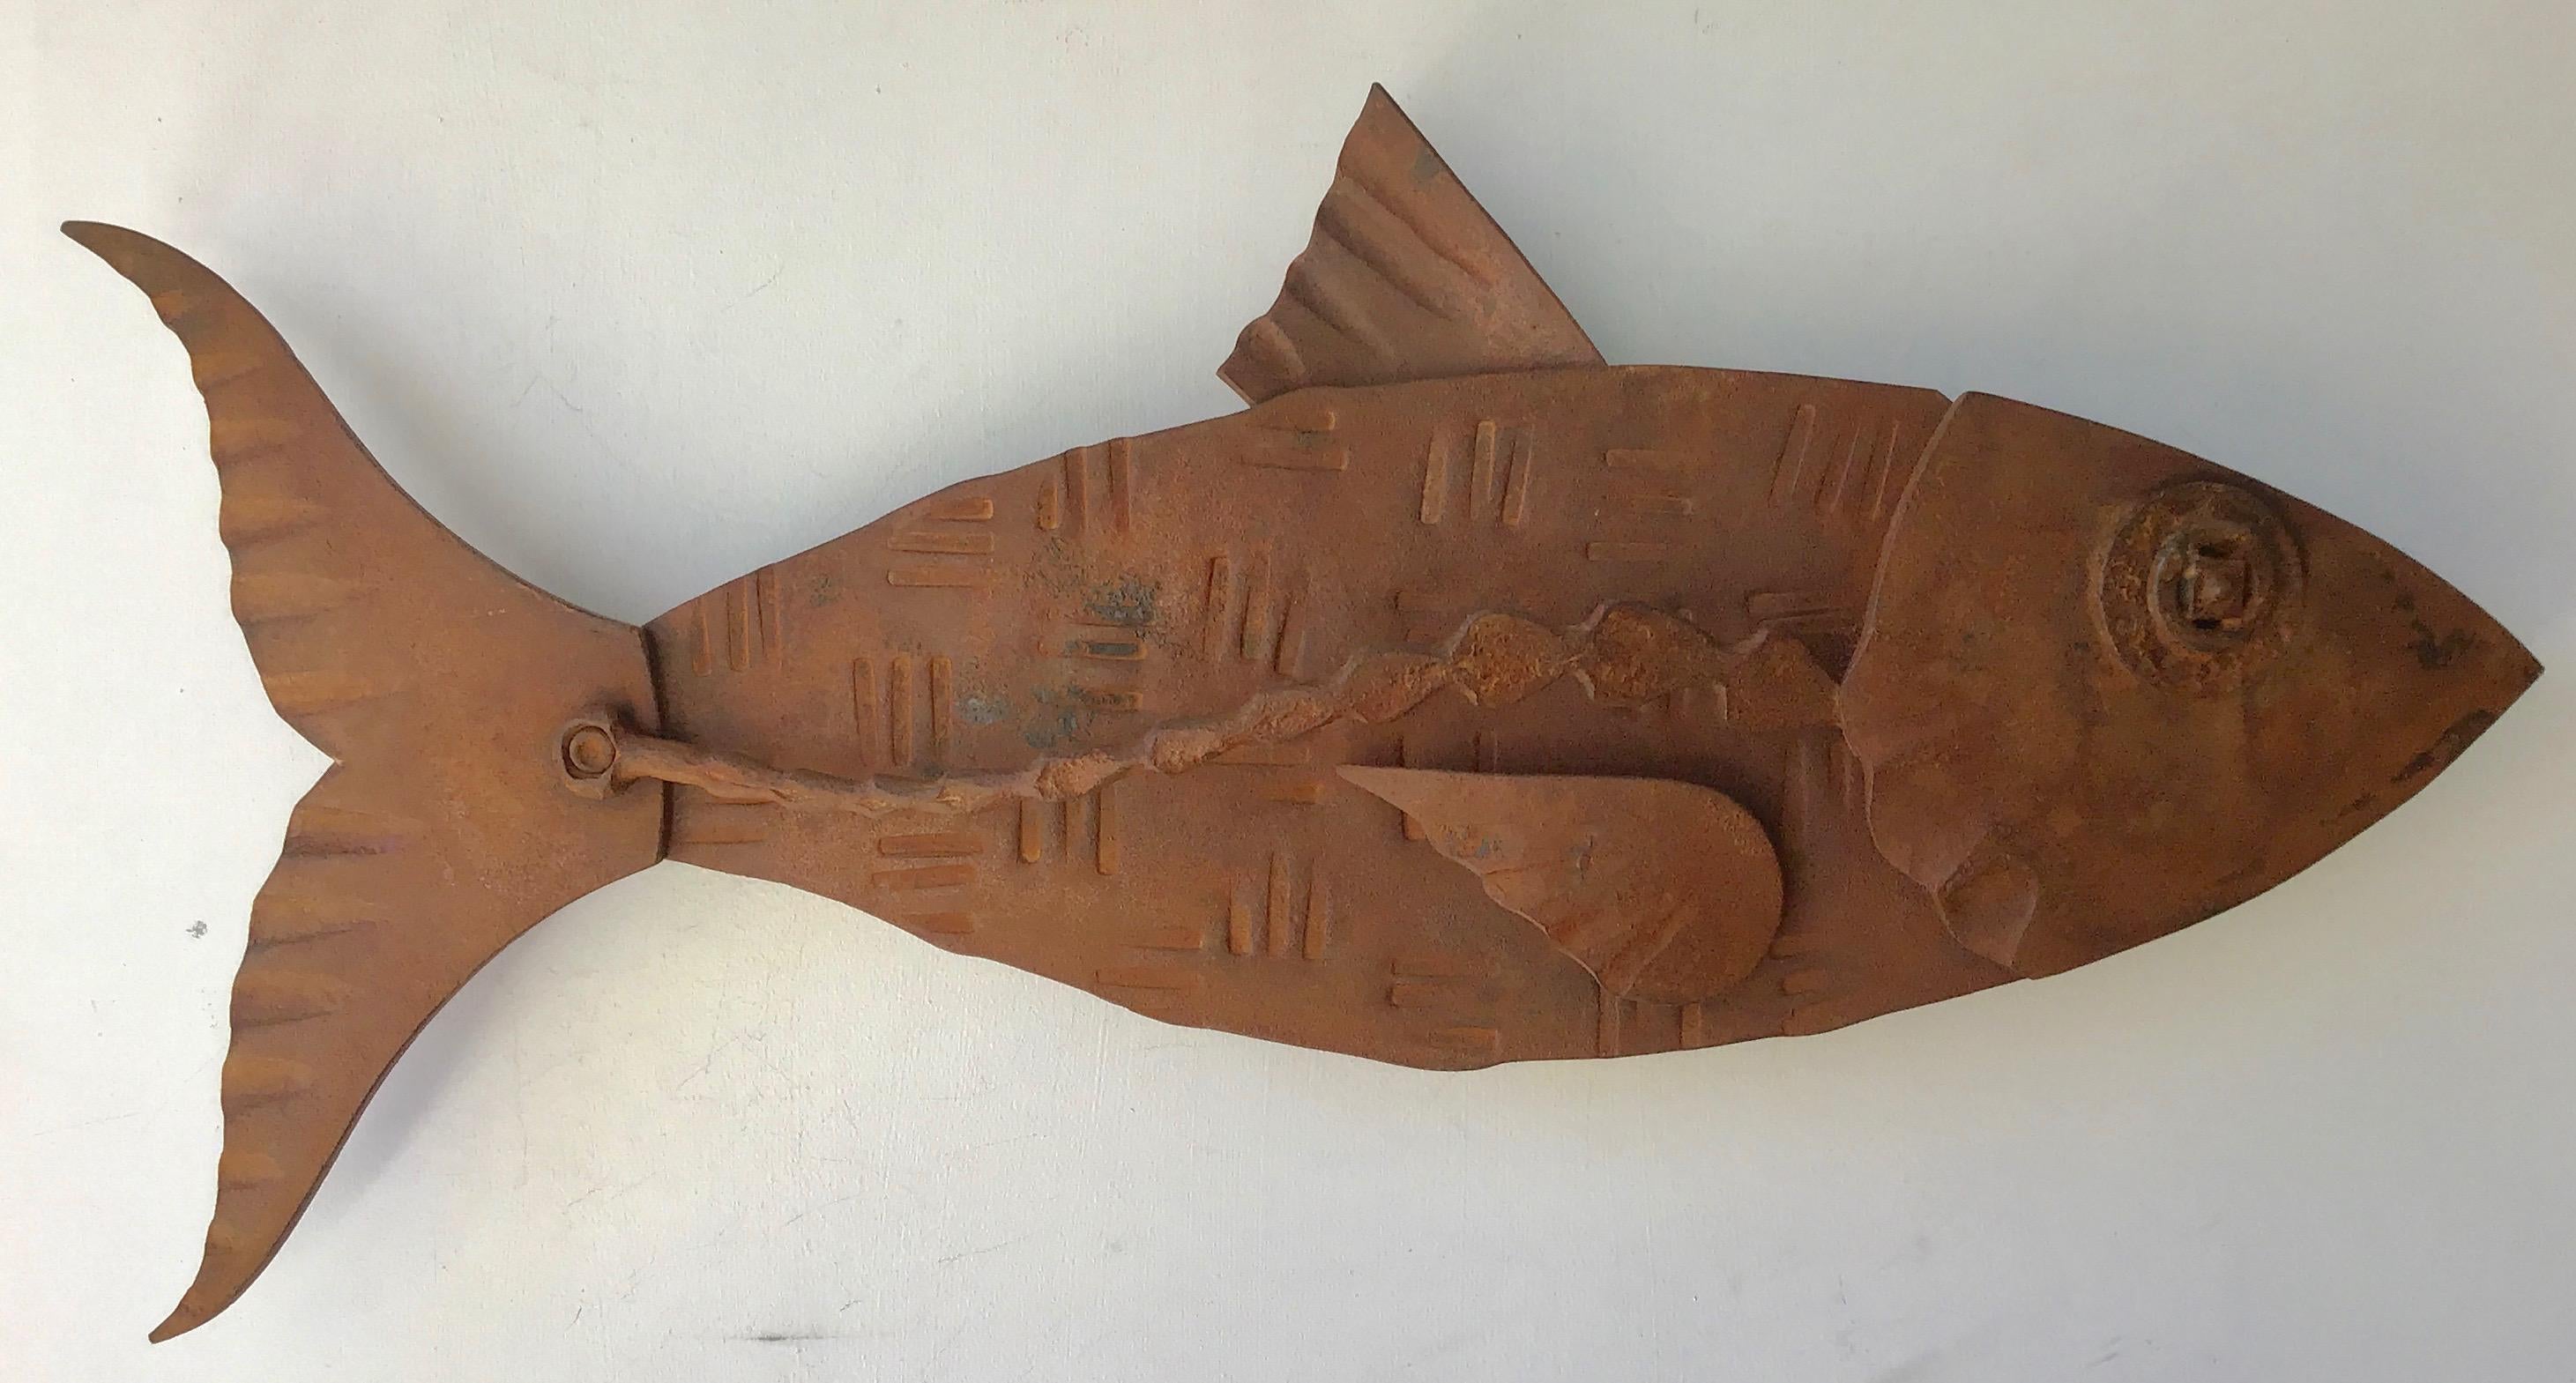 Hugh Holborn Figurative Sculpture - "Alubulidae 5" Hand forged salvaged steel fish wall sculpture